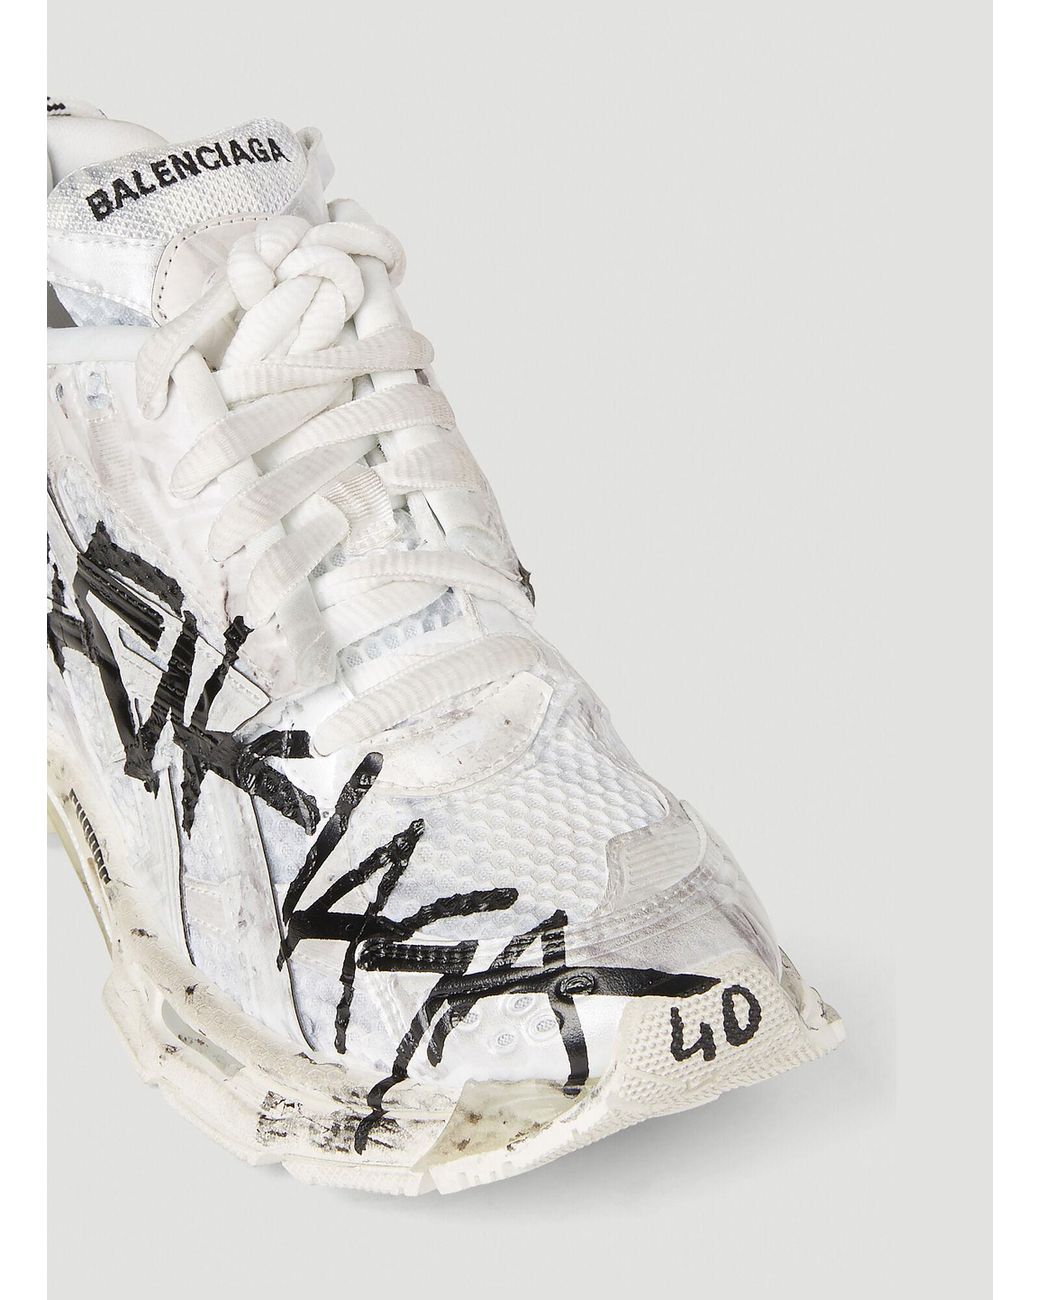 Balenciaga Graffiti Runner Sneakers in White | Lyst